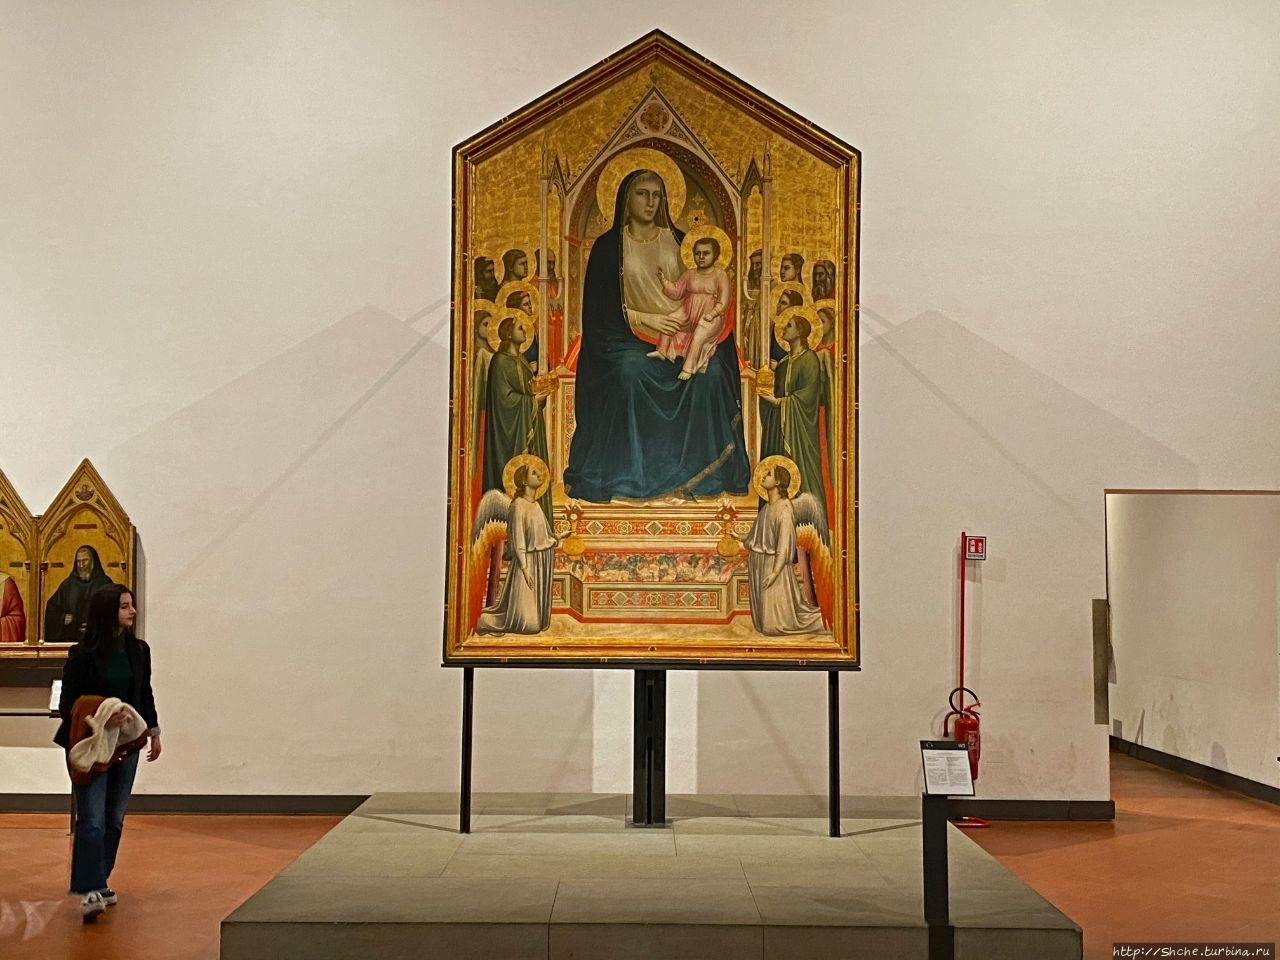 Джотто. Мадонна д’ Оньисанти. 1310. Флоренция, Италия